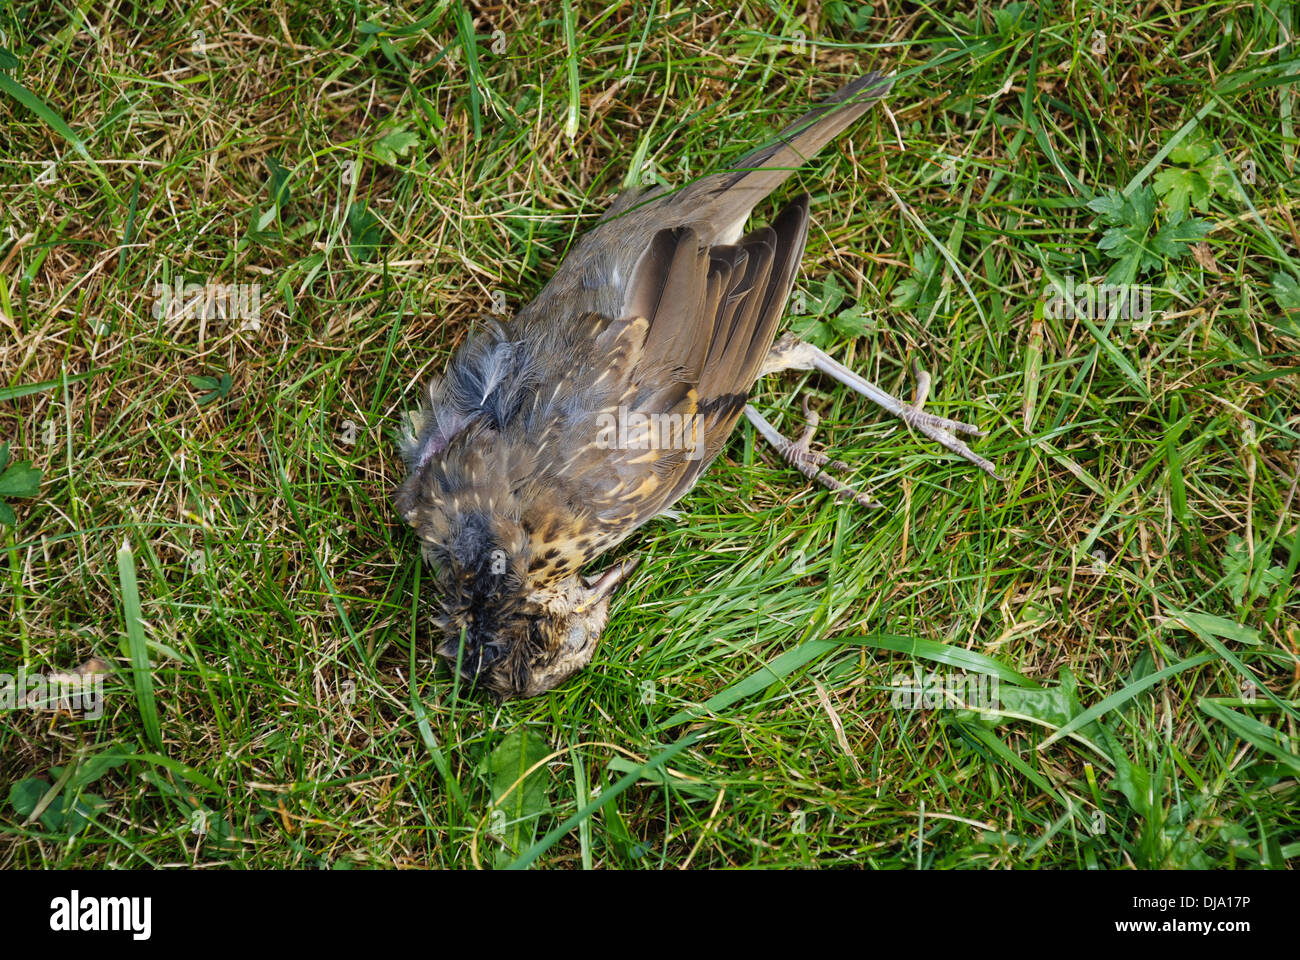 Dead bird in the grass Stock Photo